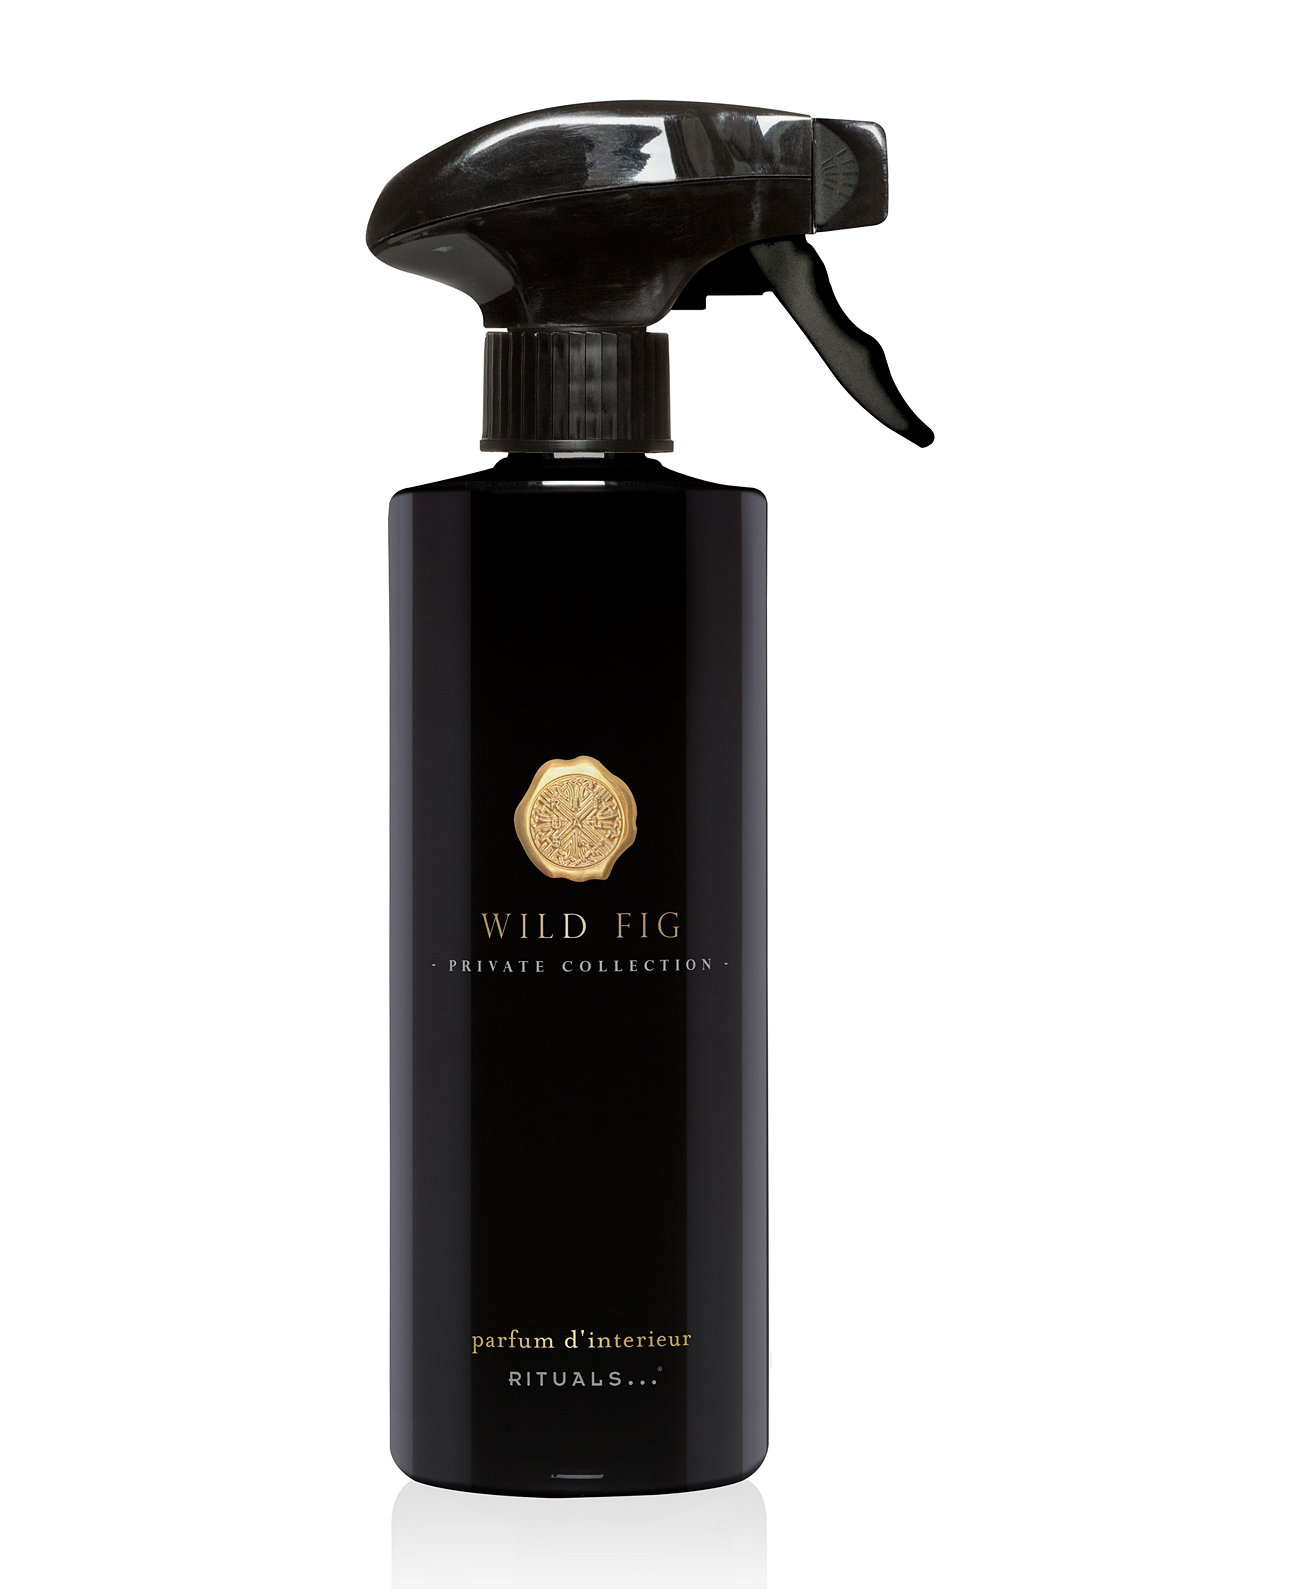 Wild Fig Parfum d'Interieur, 16.91 унций. RITUALS